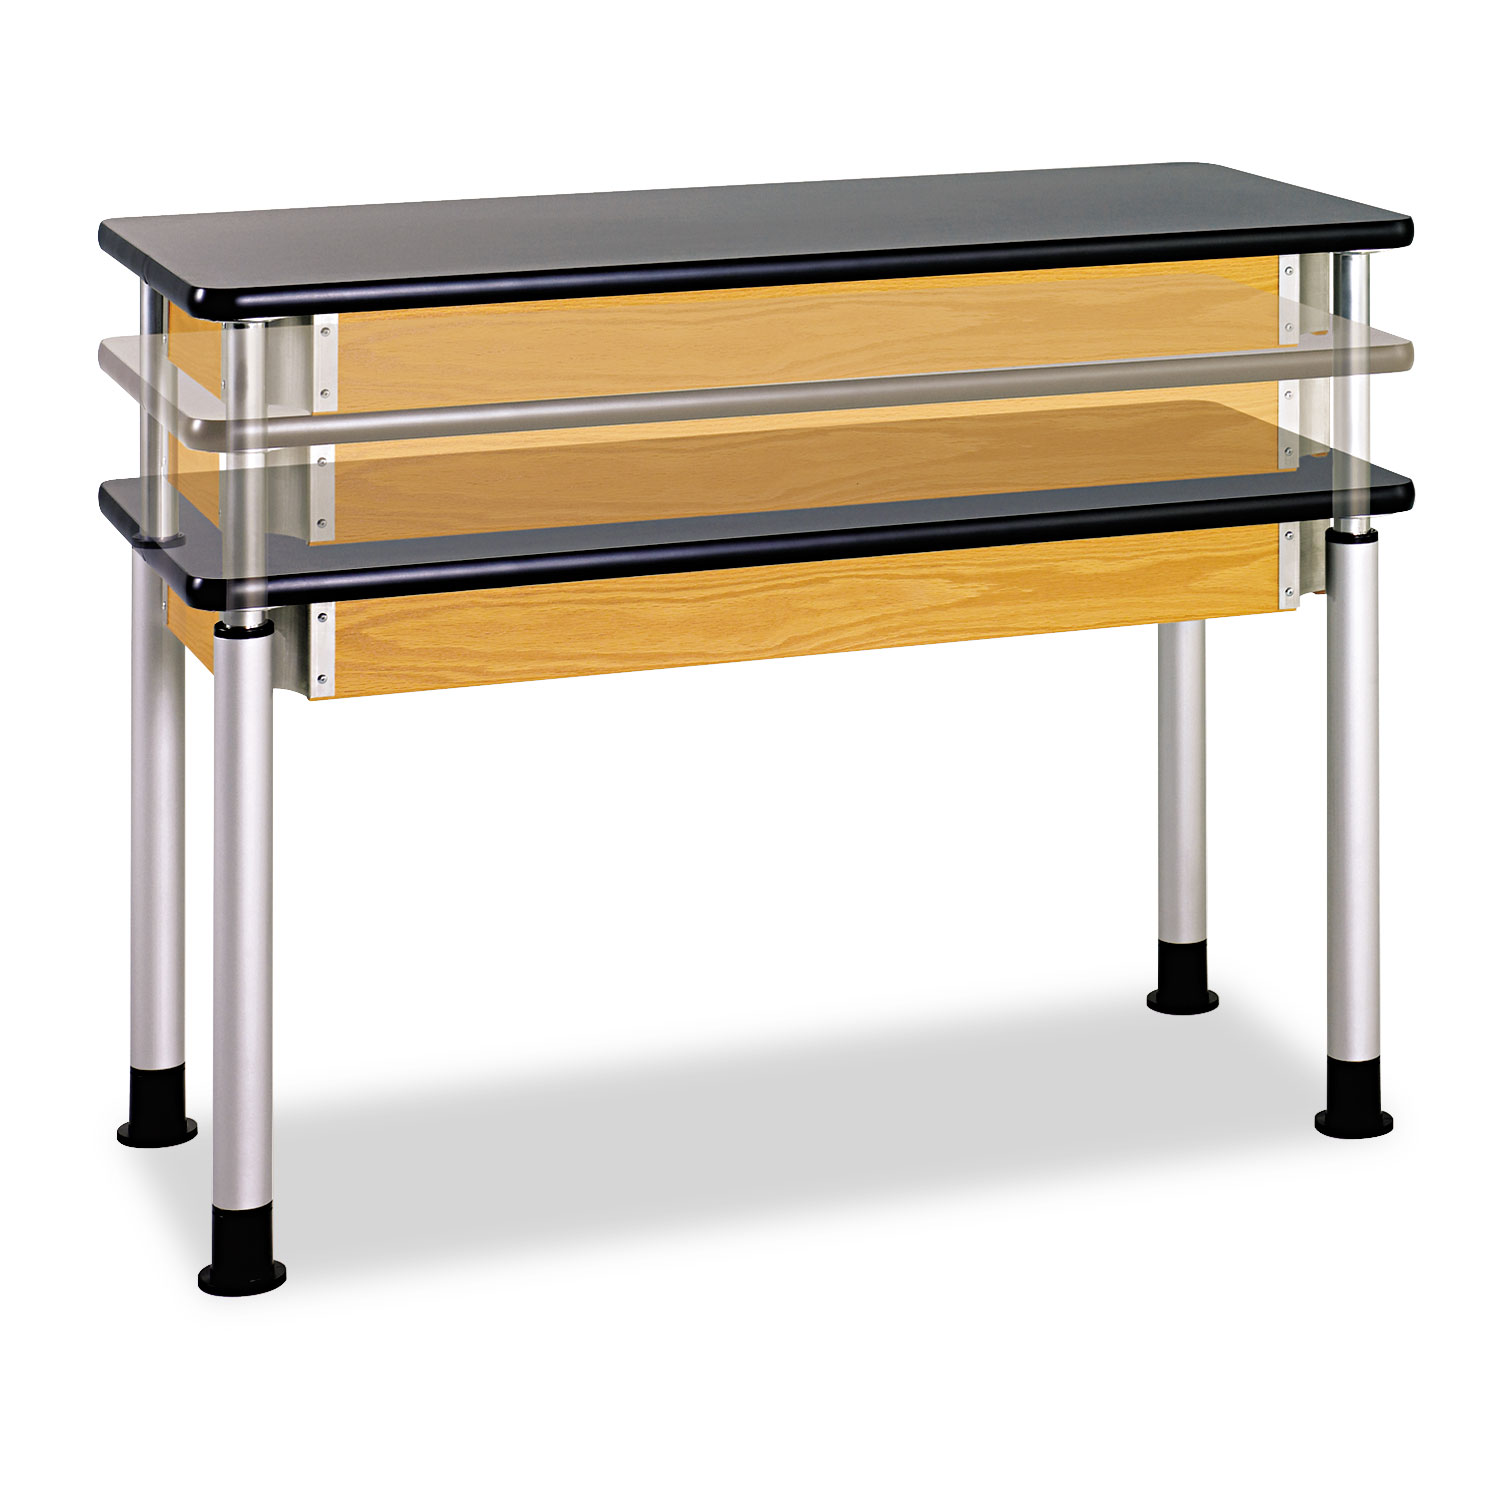 Adjustable-Height Table, Rectangular, 60w x 24d x 42h, Black